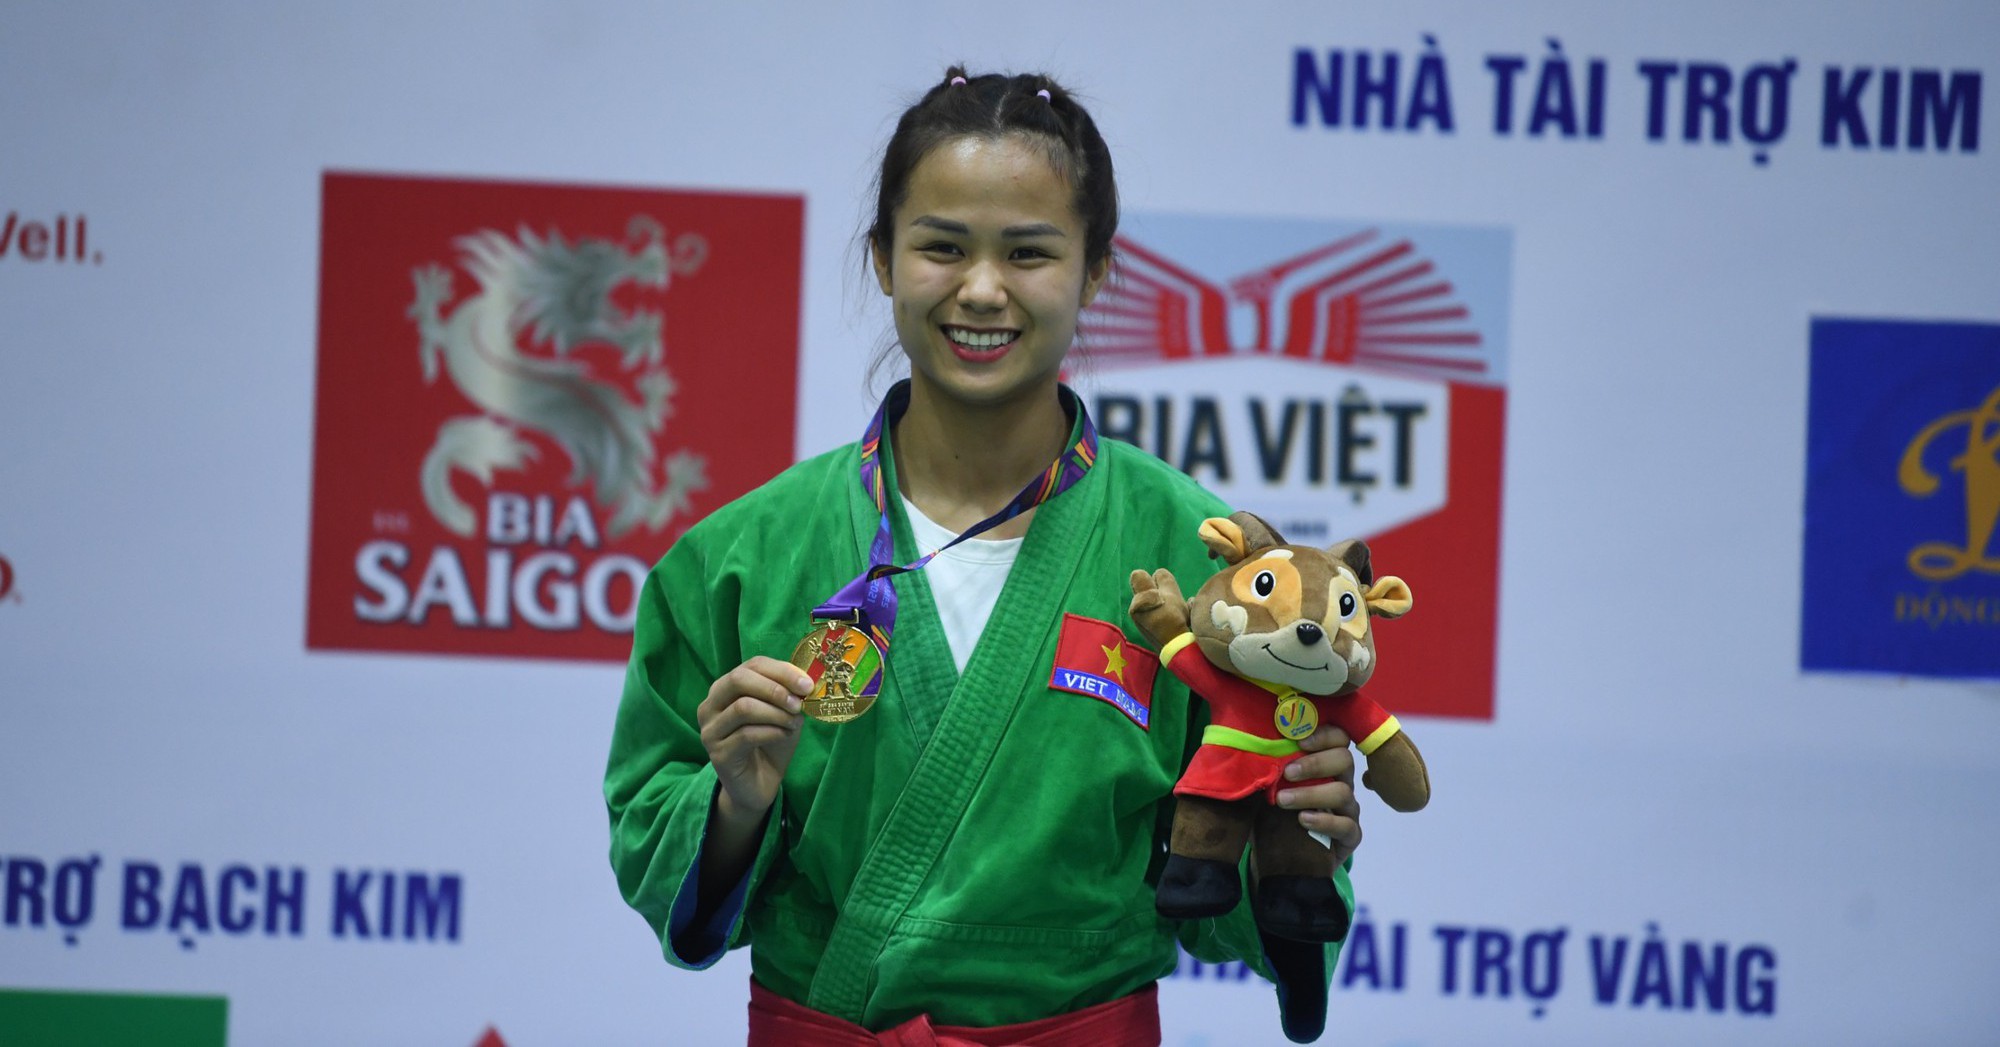 Kurash “bumper” 4 gold medals at the 31st SEA Games, what did coach Nguyen Tuan Hoc say?